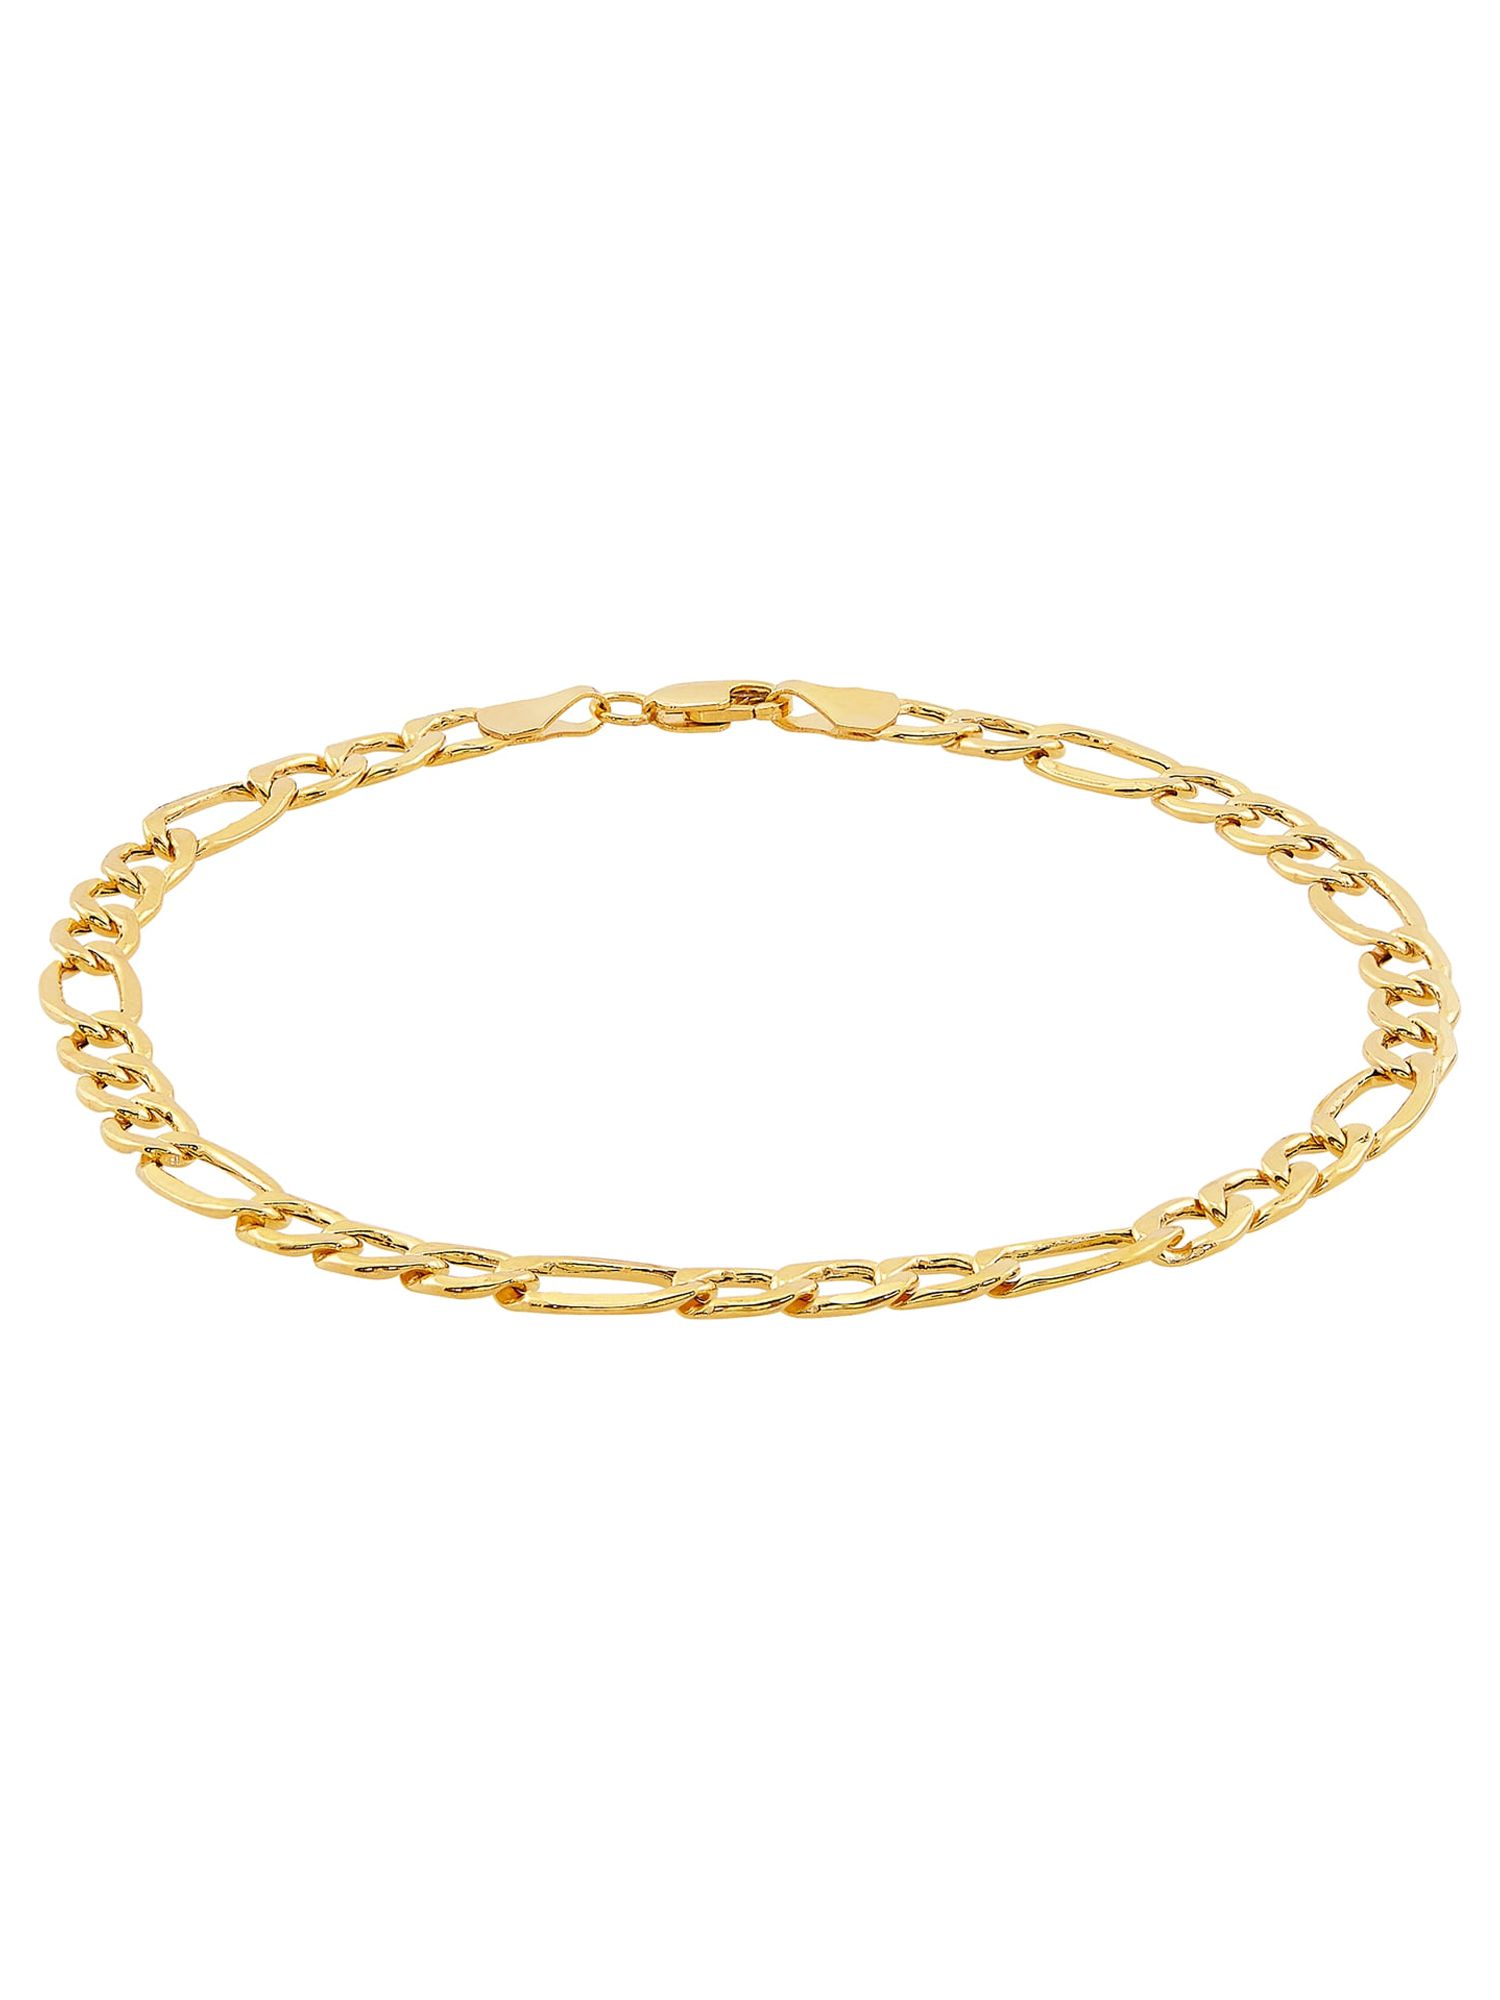 Brilliance Fine Jewelry 10K Yellow Gold 3 round 1 oval Link Figaro Bracelet, 8.5" - image 2 of 4